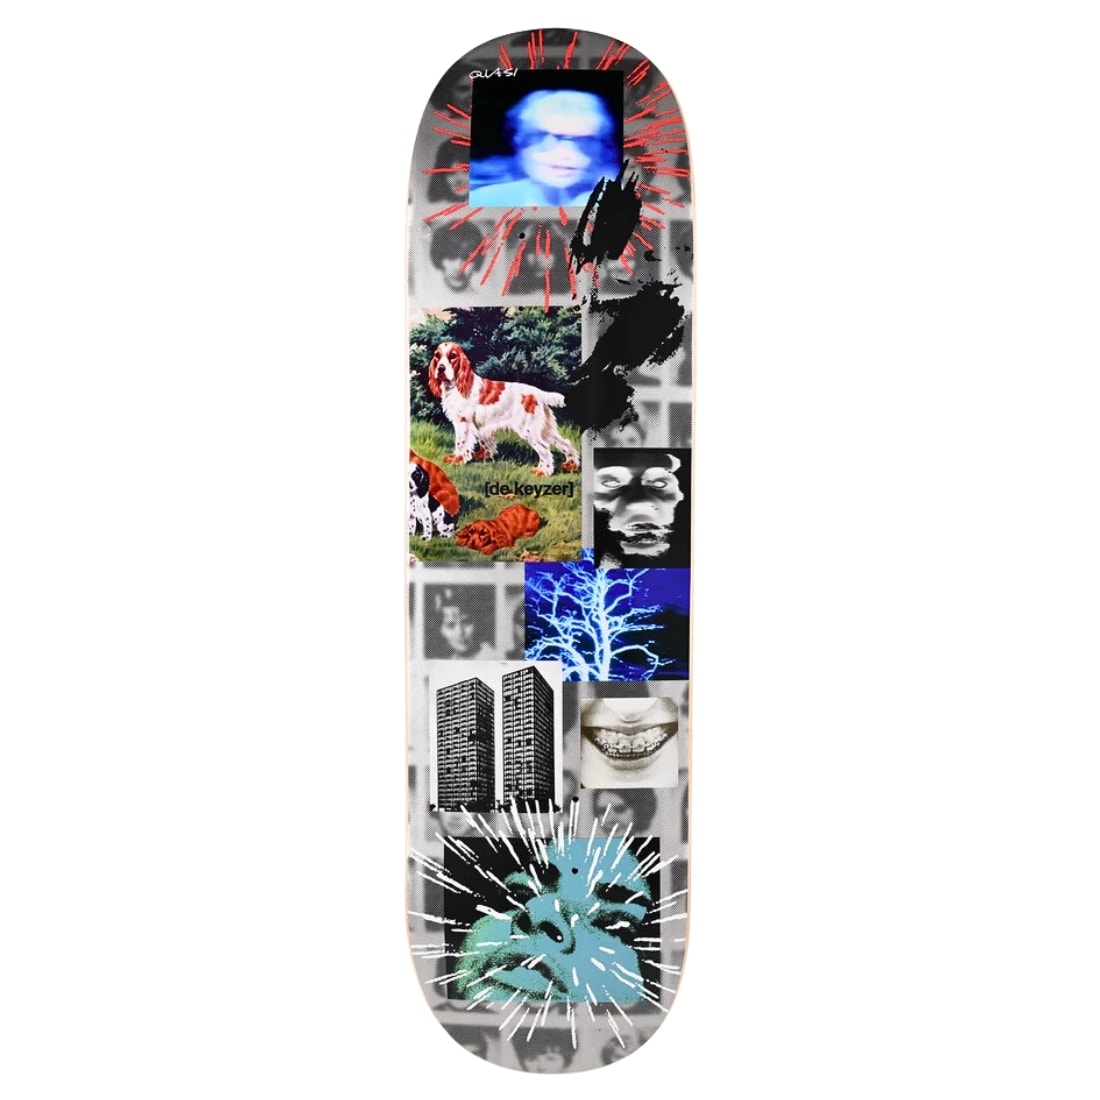 Quasi 8.5" De Keyzer Hard Drive Deck - Multi - Skateboard Deck by Quasi 8.5 inch